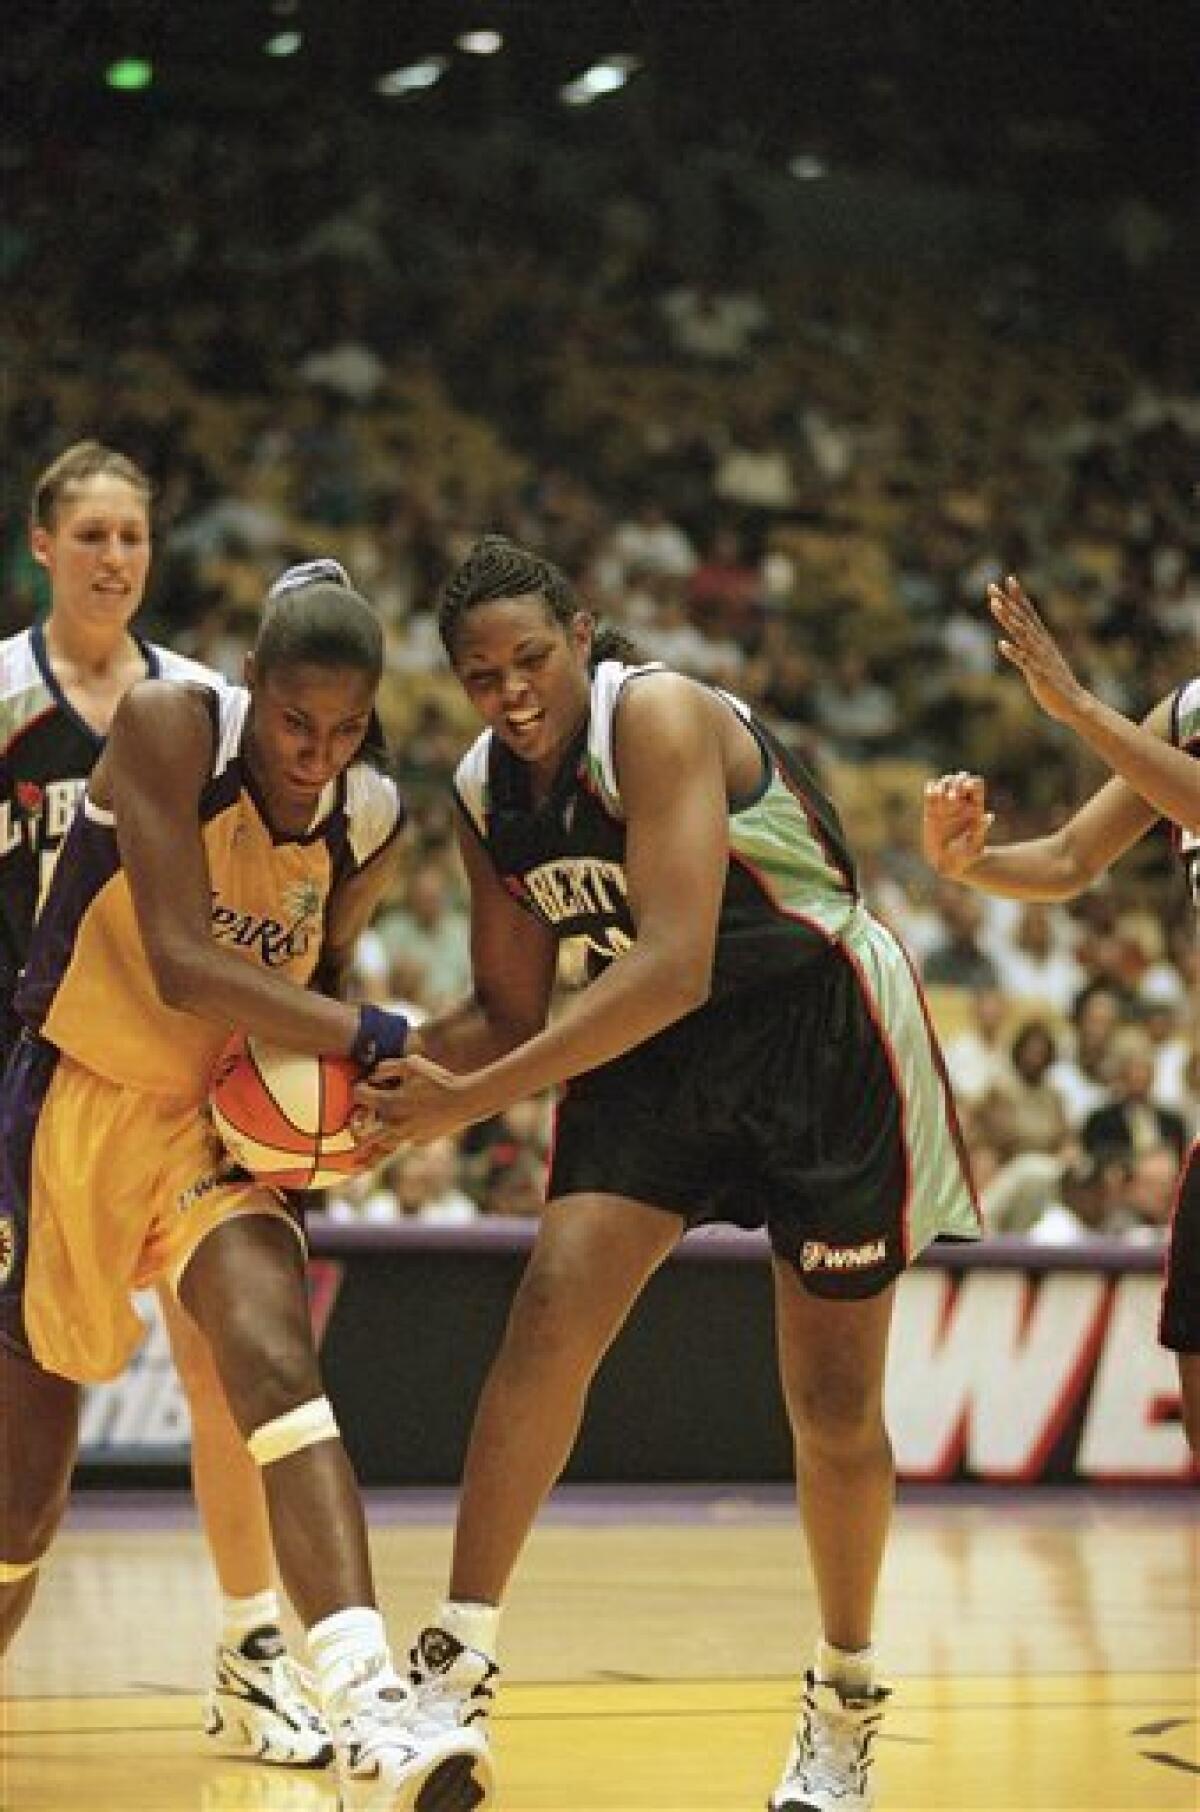 In launching WNBA, David Stern helped grow women's basketball - ESPN